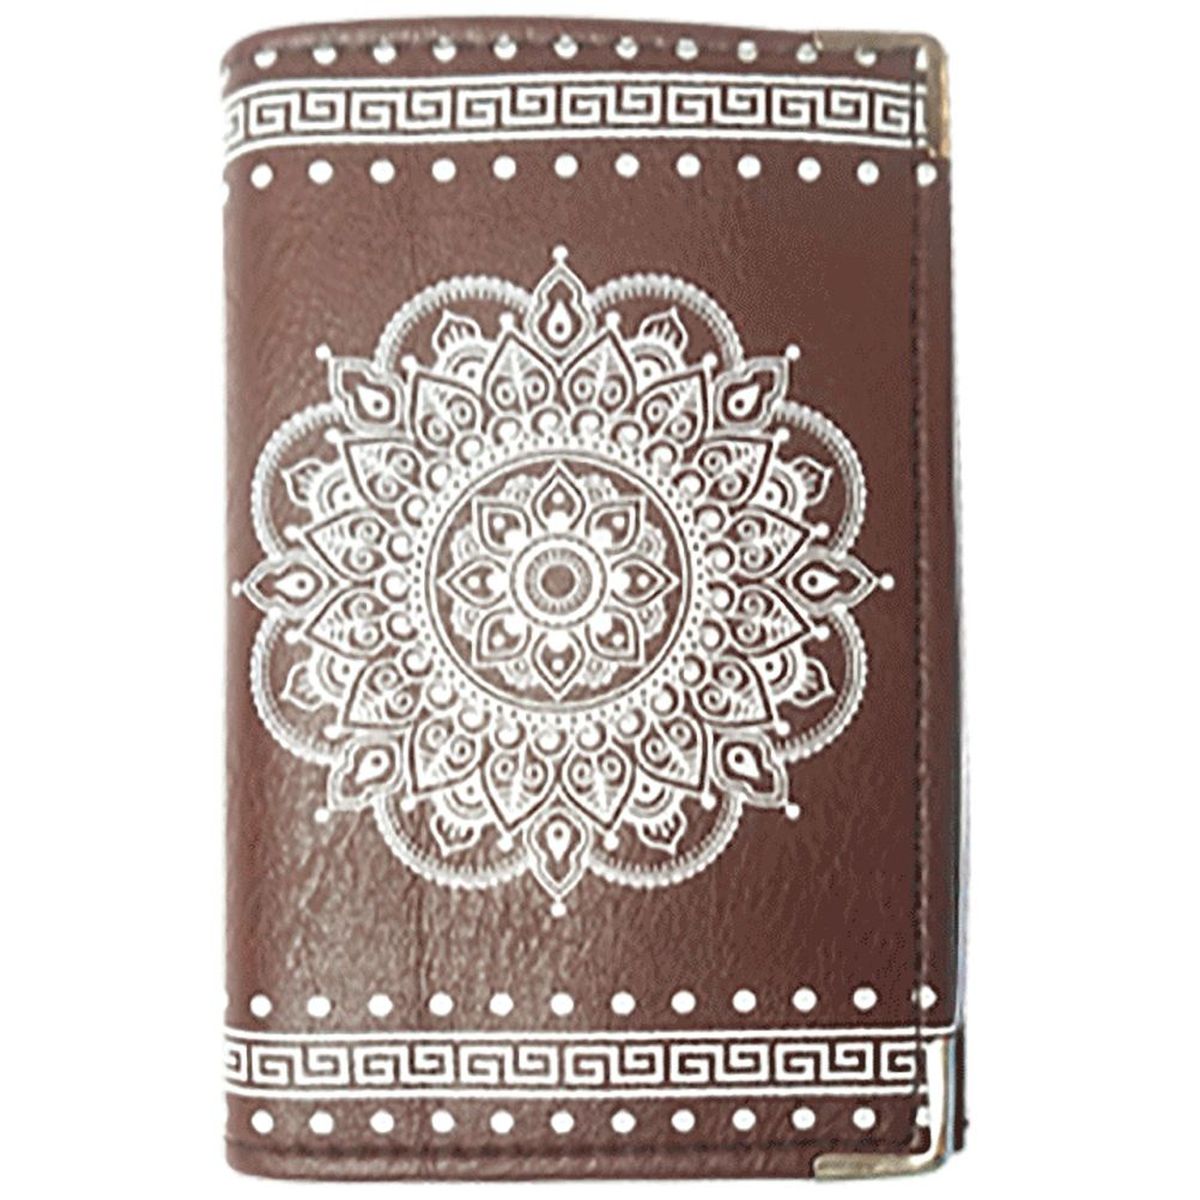 Car Papers Holder Indian Spirit 14 x 9 cm - Dark Brown